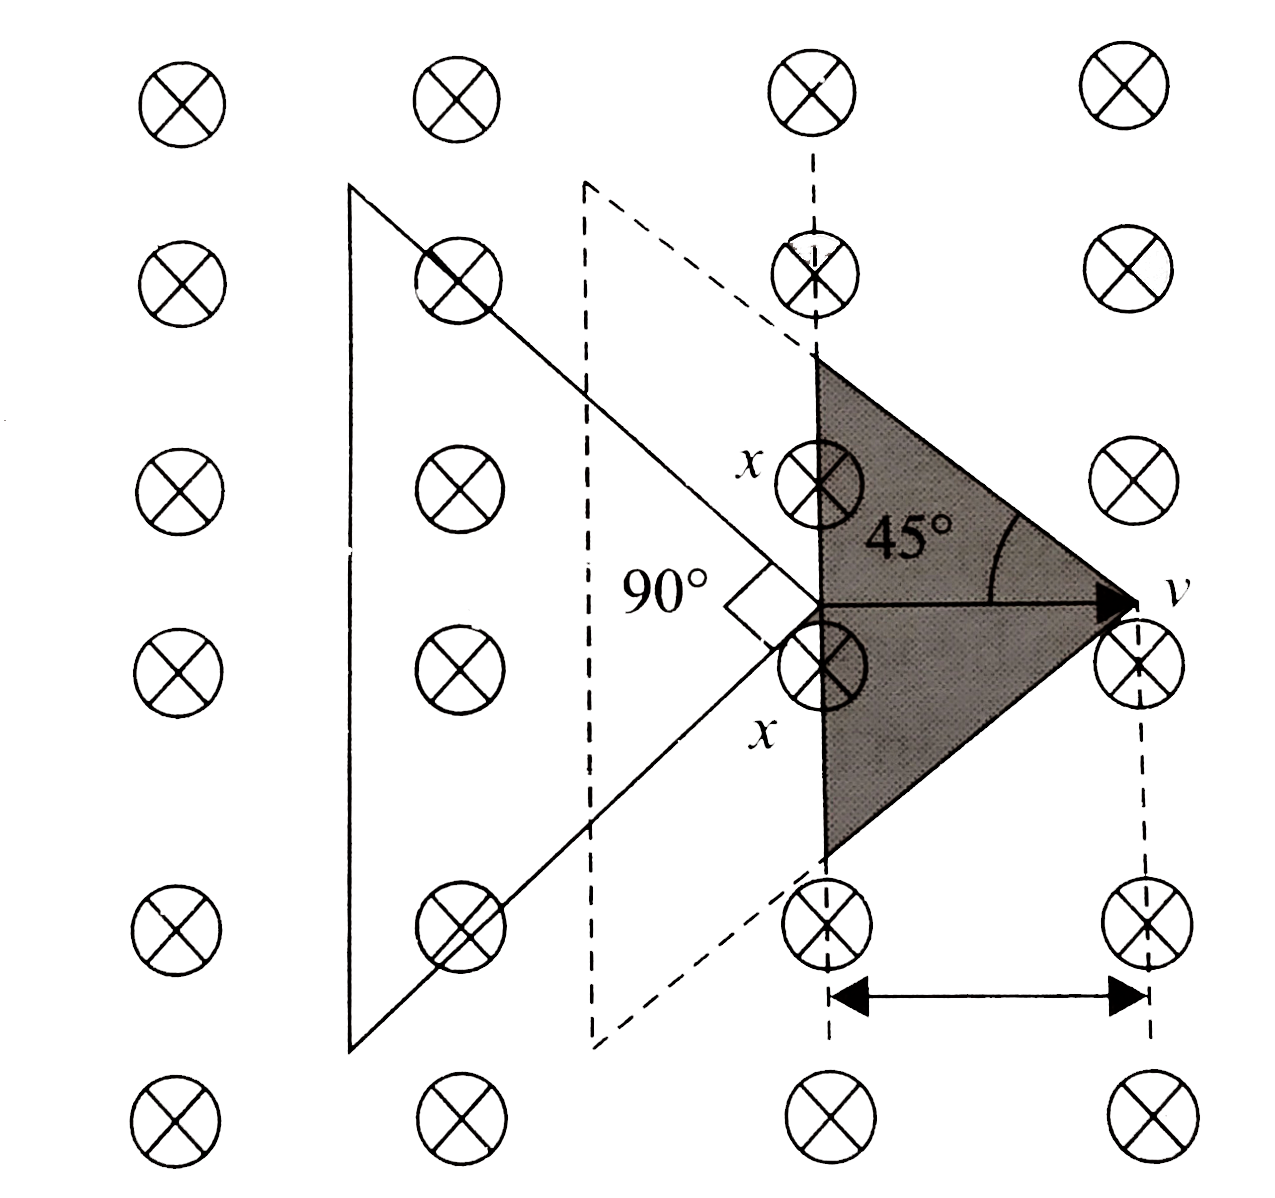 Figure Shows An Isosceles Triangle Wire Frame With Apex Angle Equa